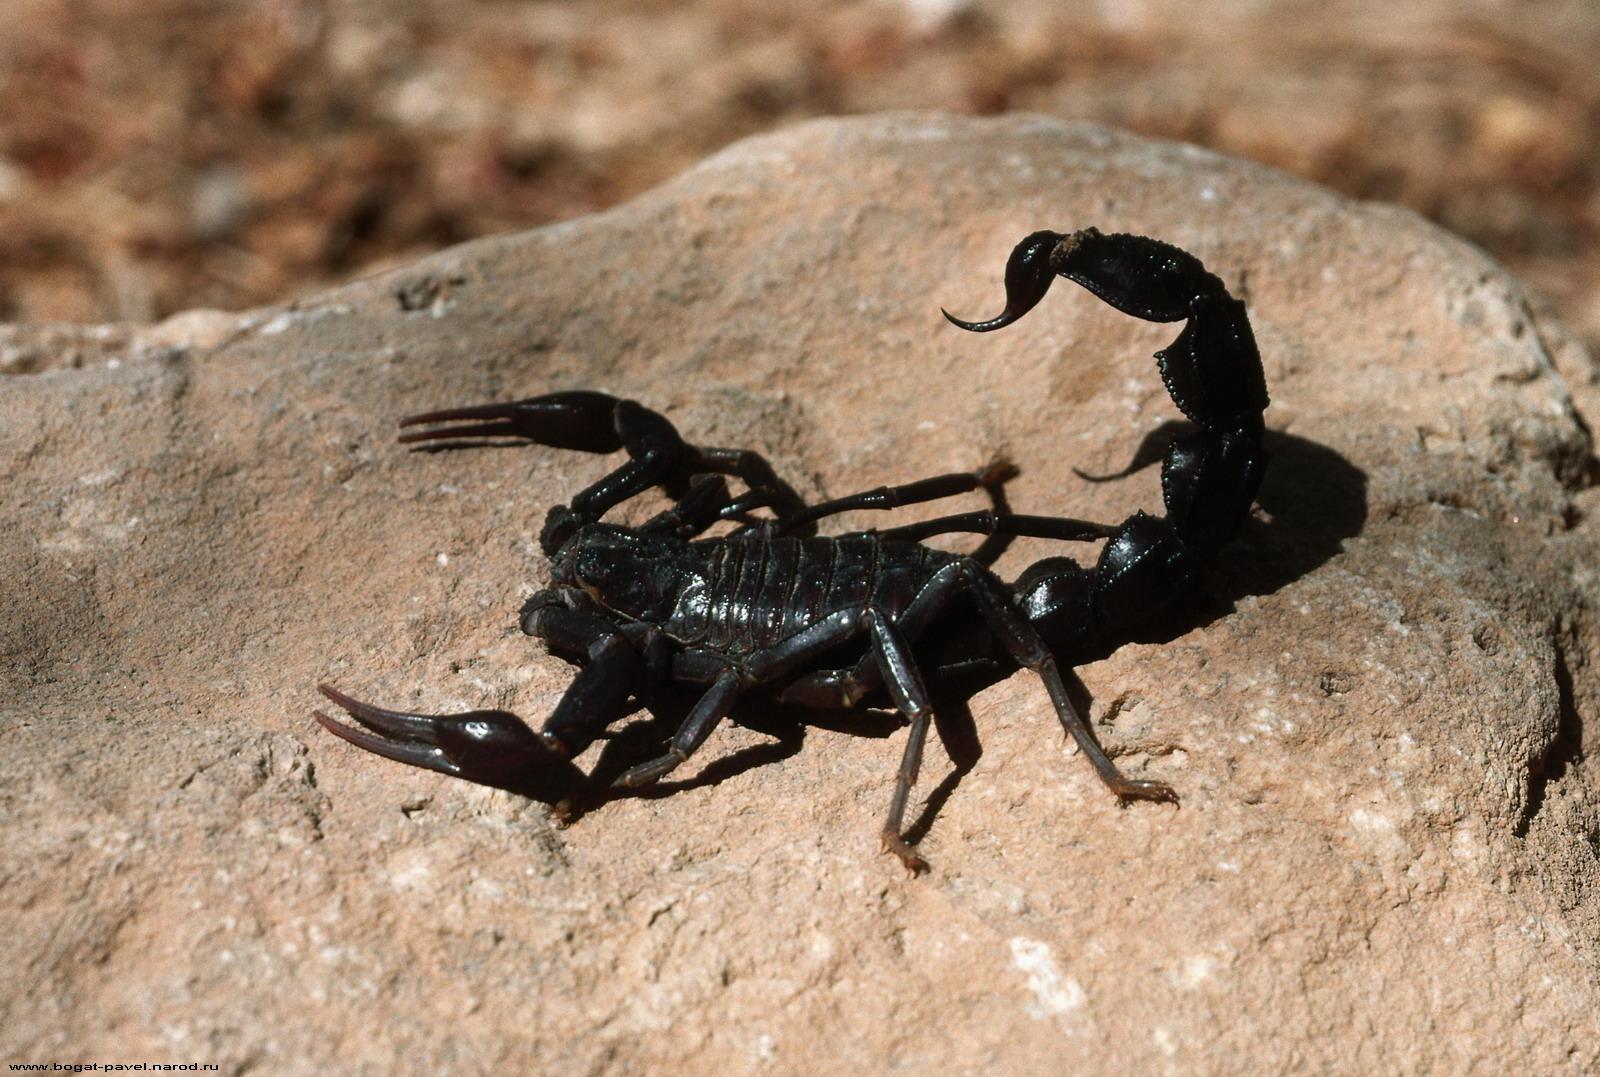 Scorpion Arachnids Hd Wallpapers For Pc, Scorpion Arachnids, Animal